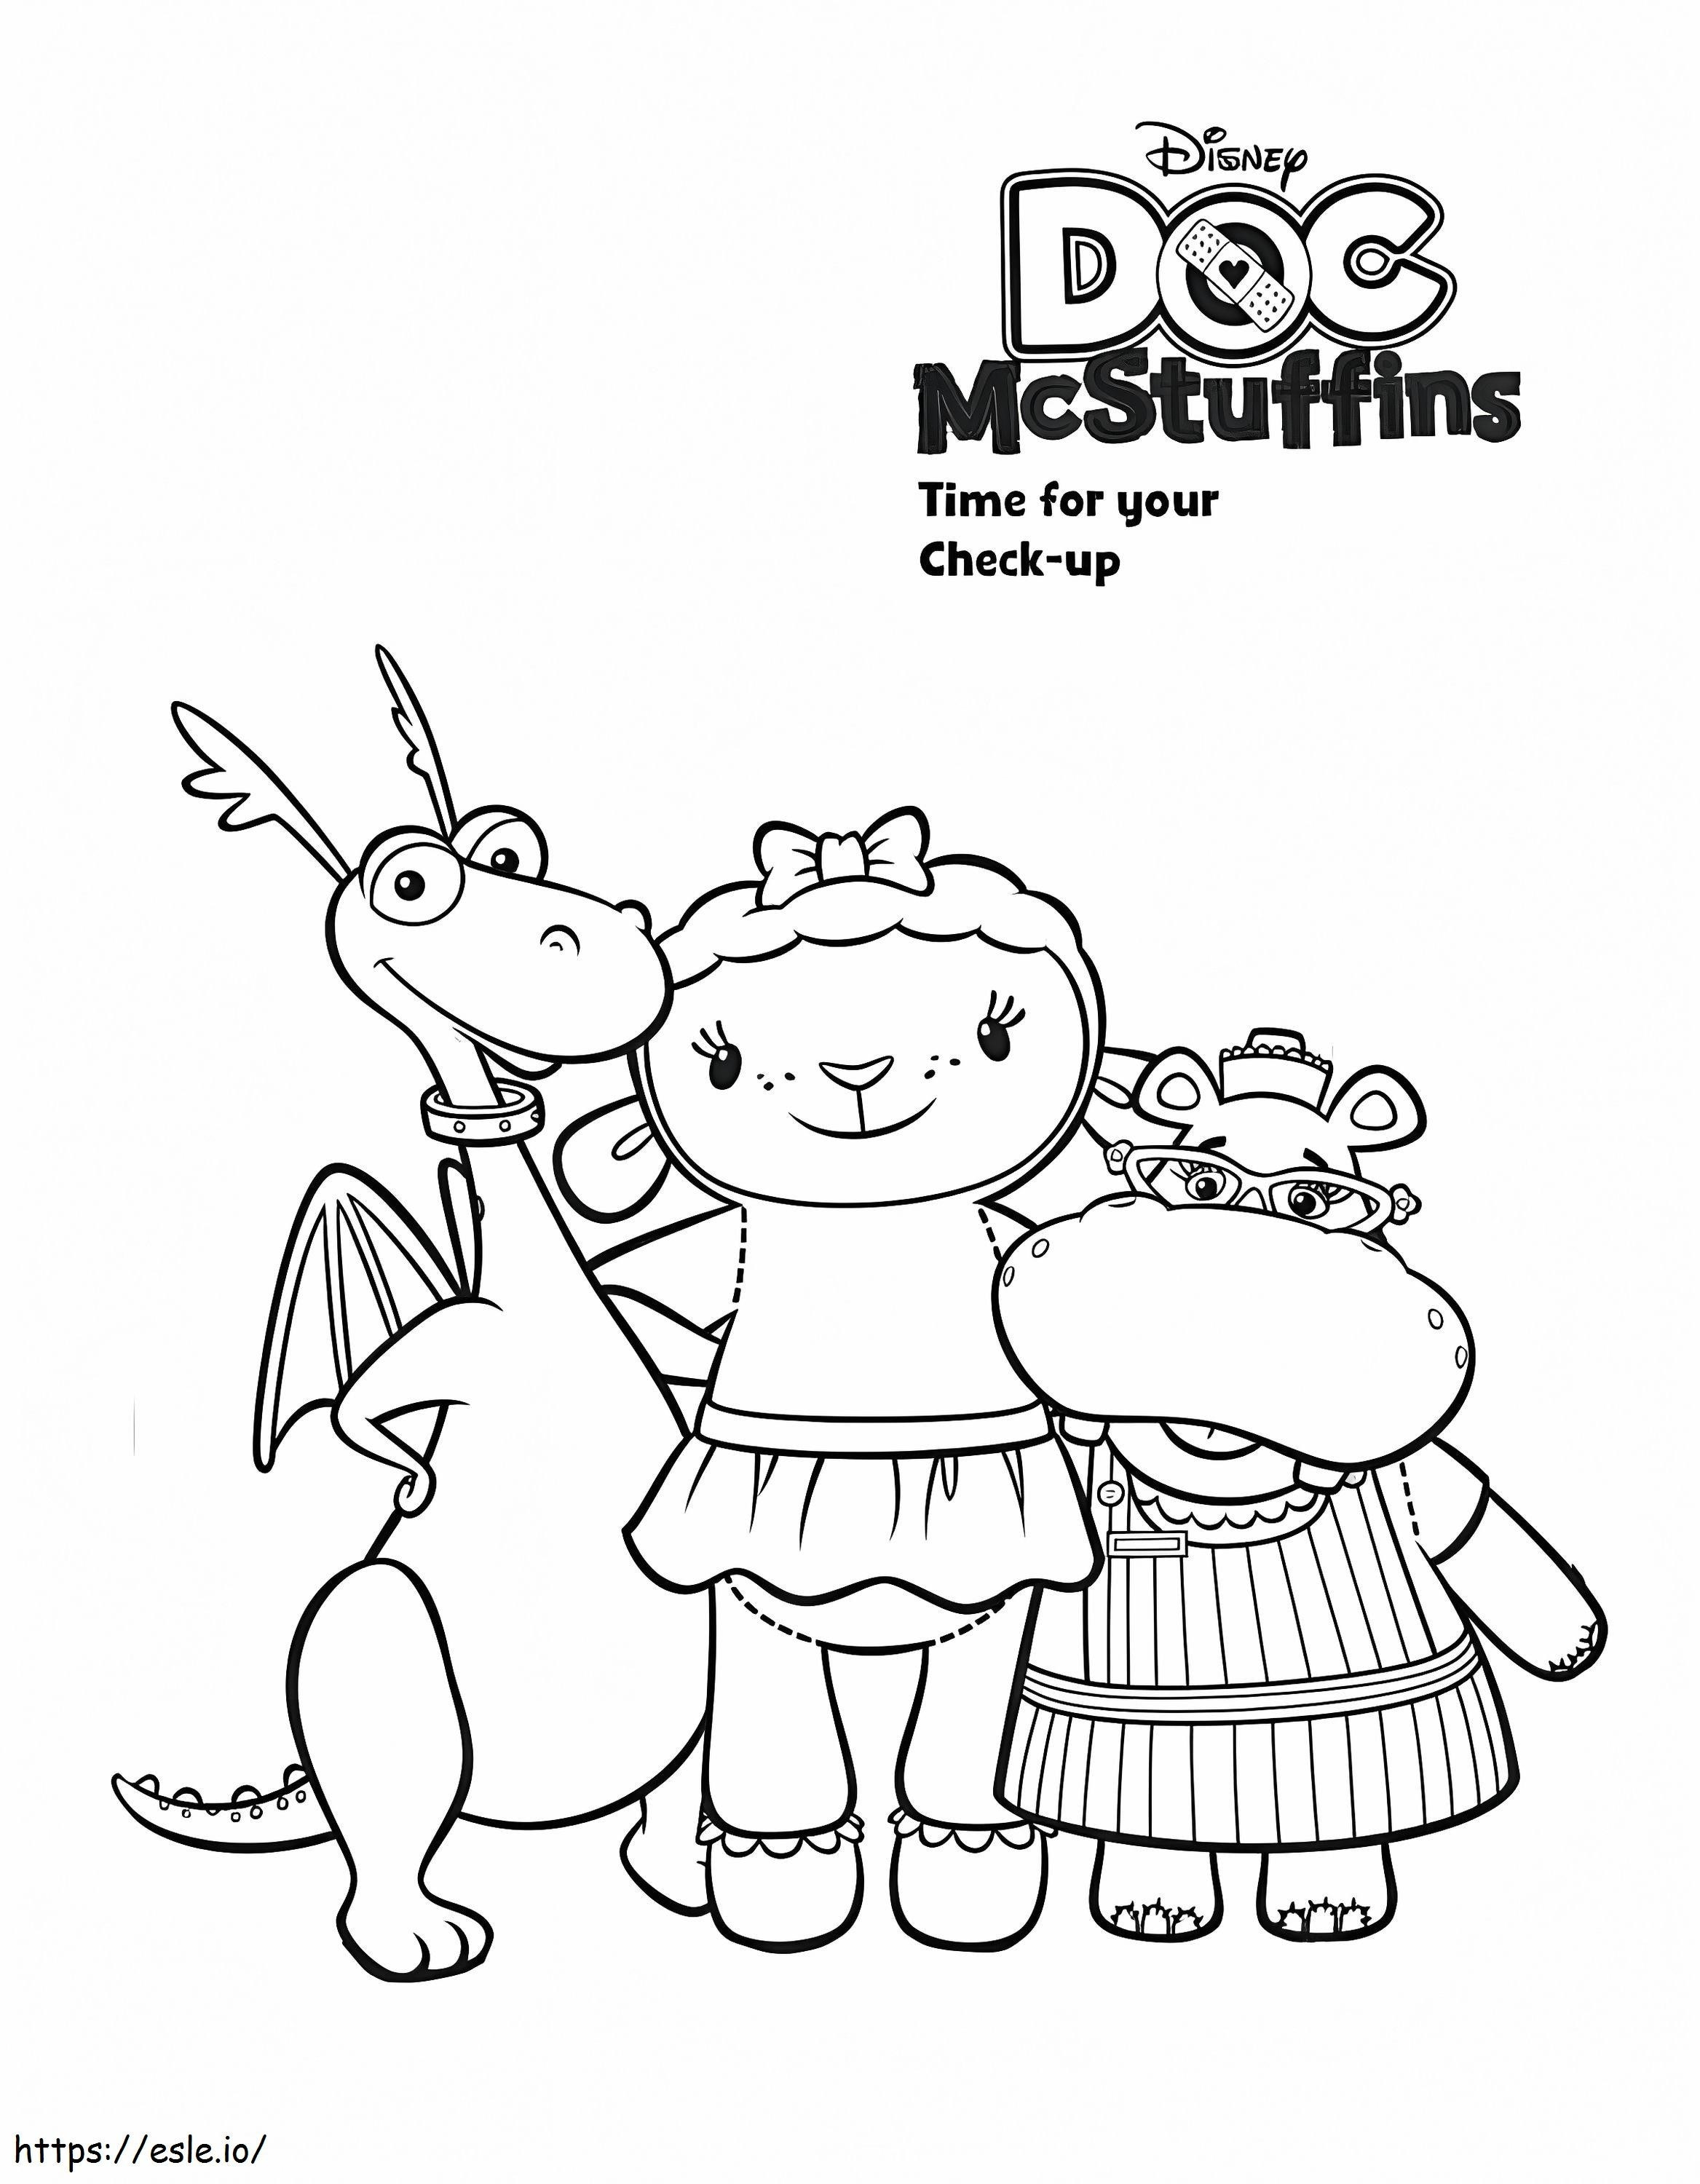 Disney Doc McStuffins da colorare